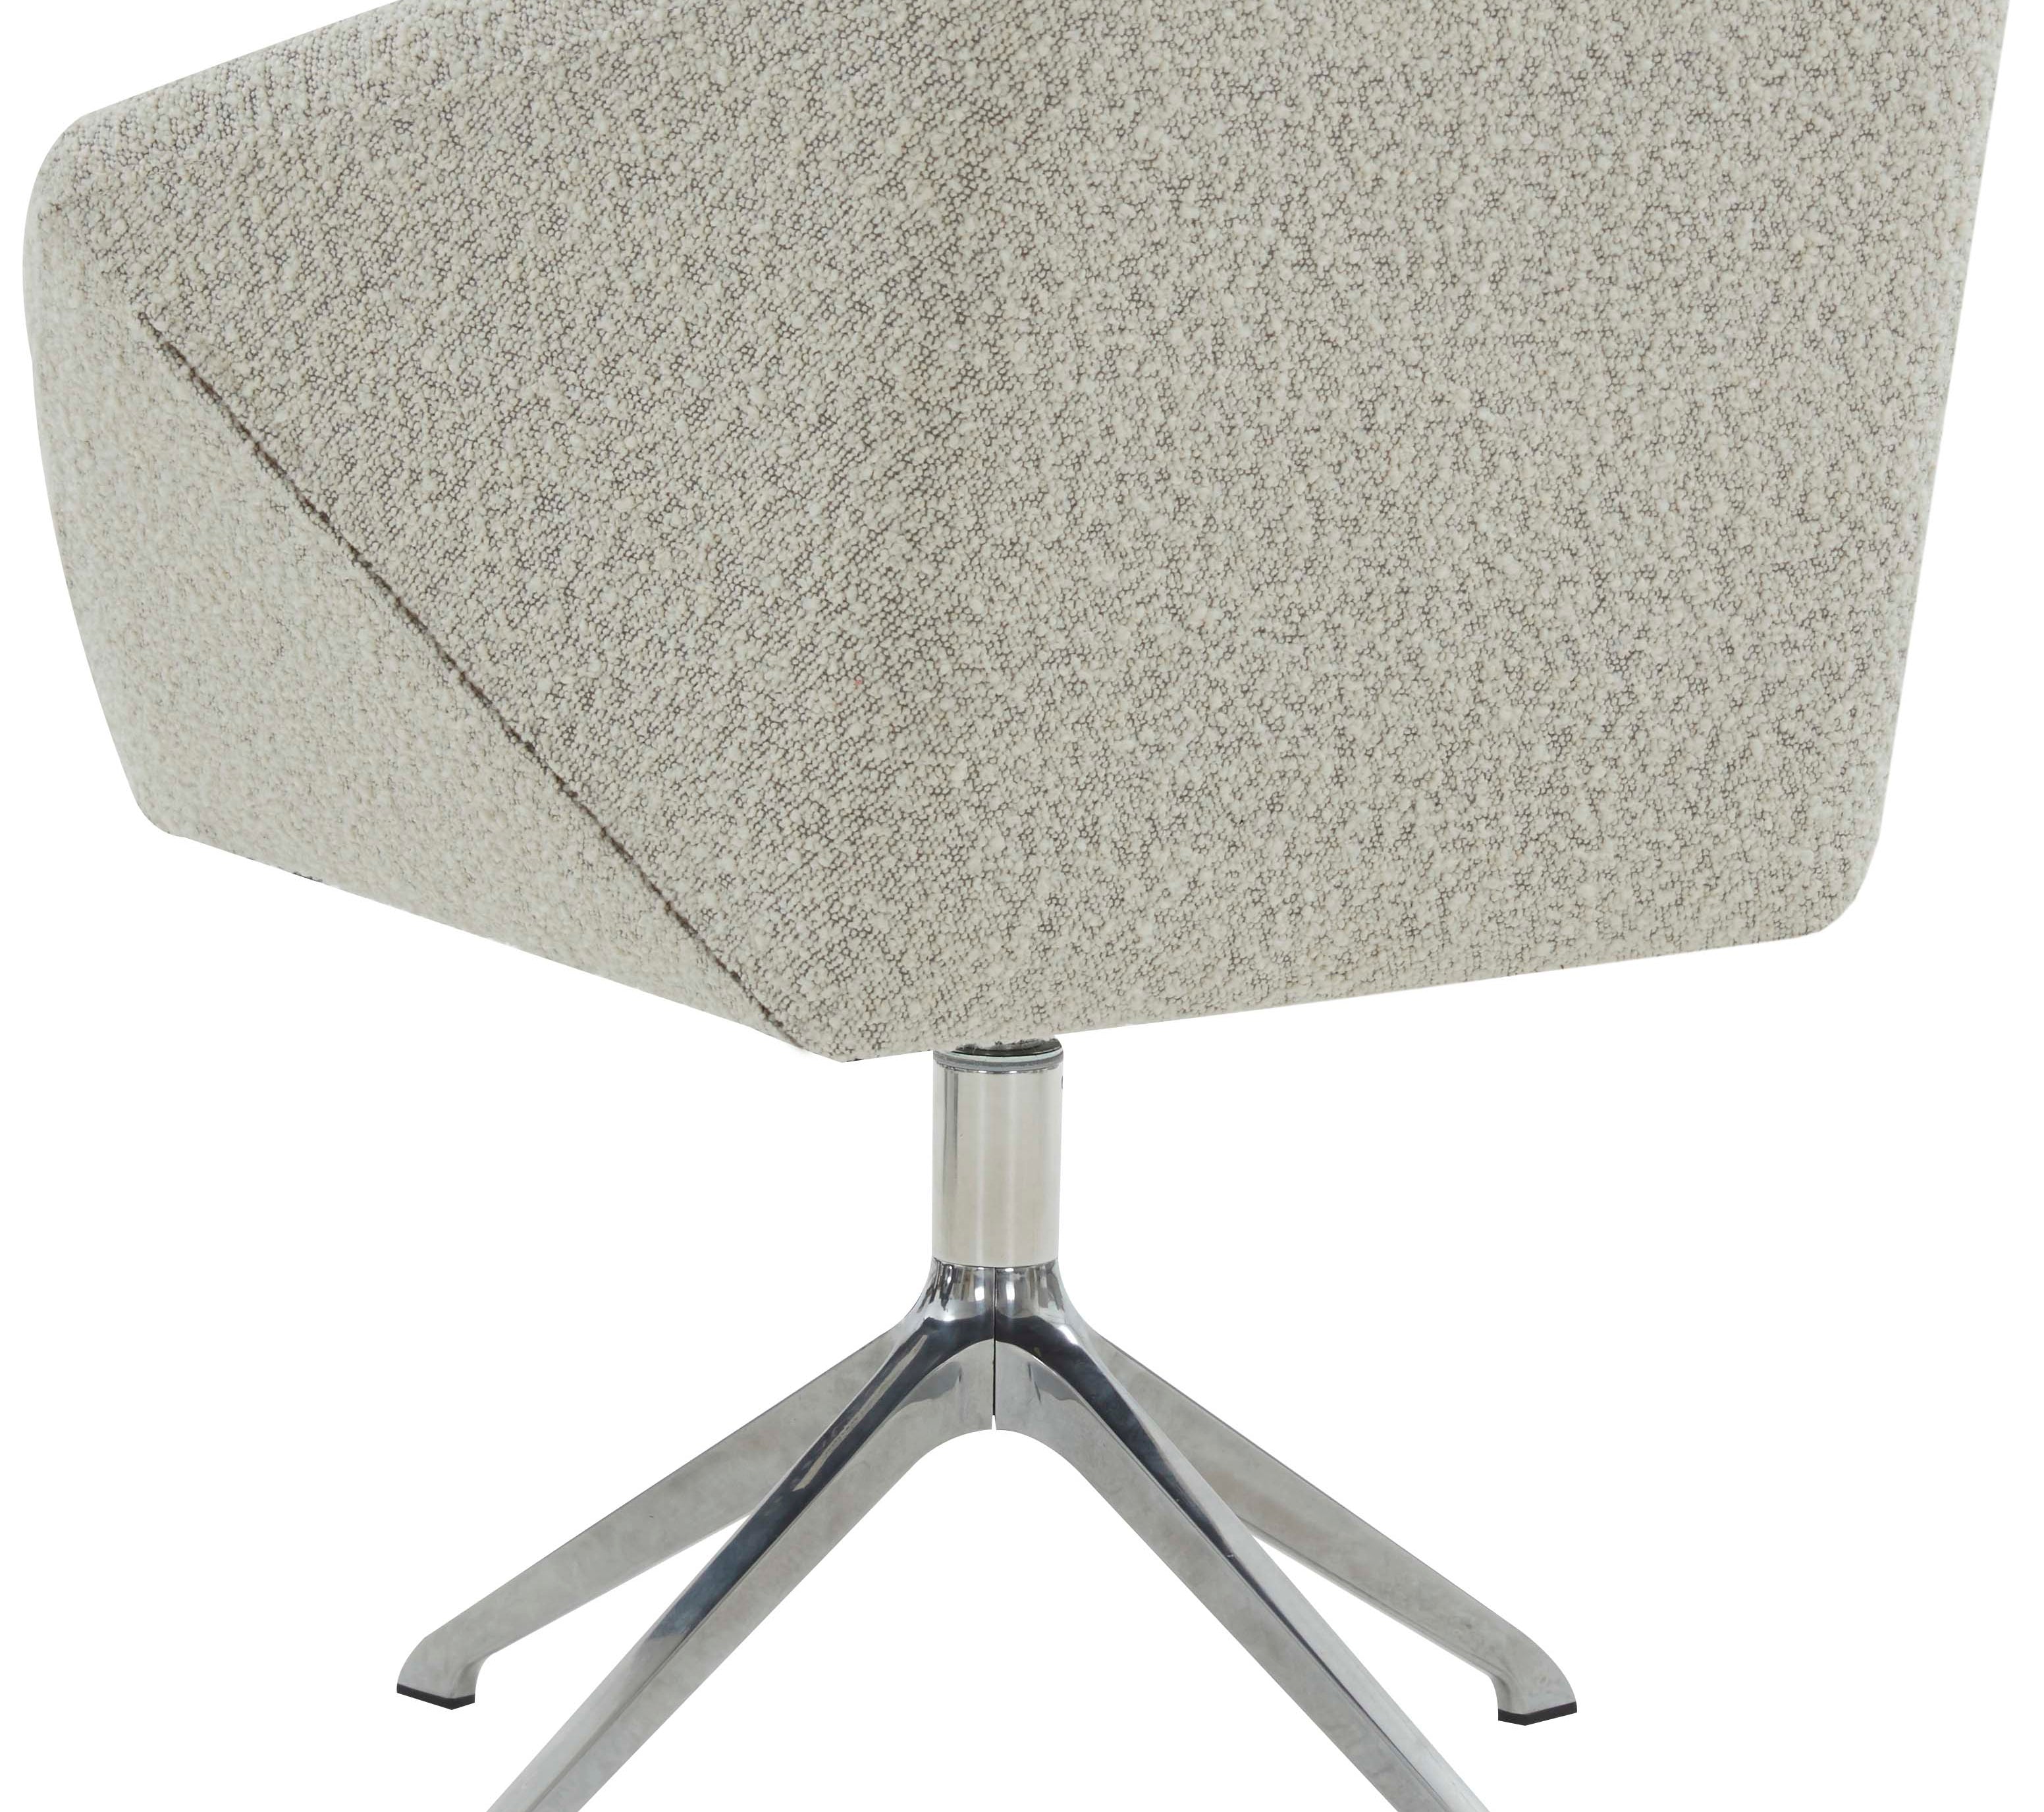 Safavieh Couture Felix Boucle Swivel Desk Chair - Light Grey / Silver